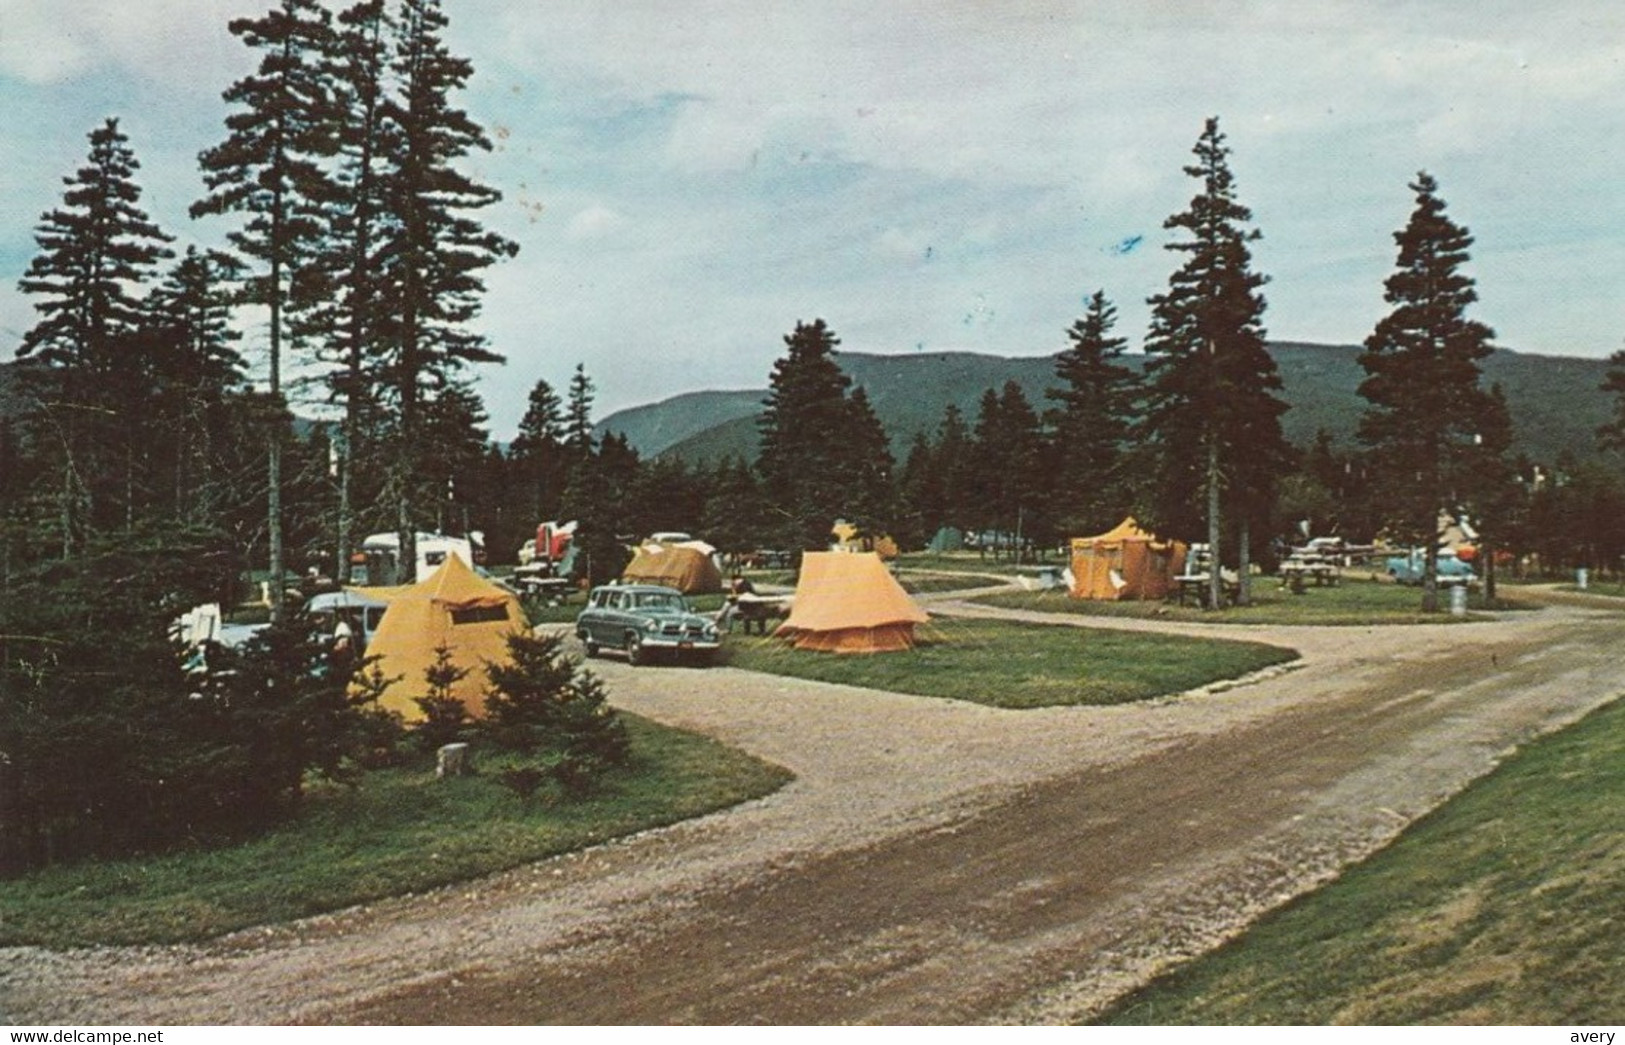 Camp Grounds At Ingonish, Cape Breton, Nova Scotia In The Cape Bretons Highlands National Park - Cape Breton